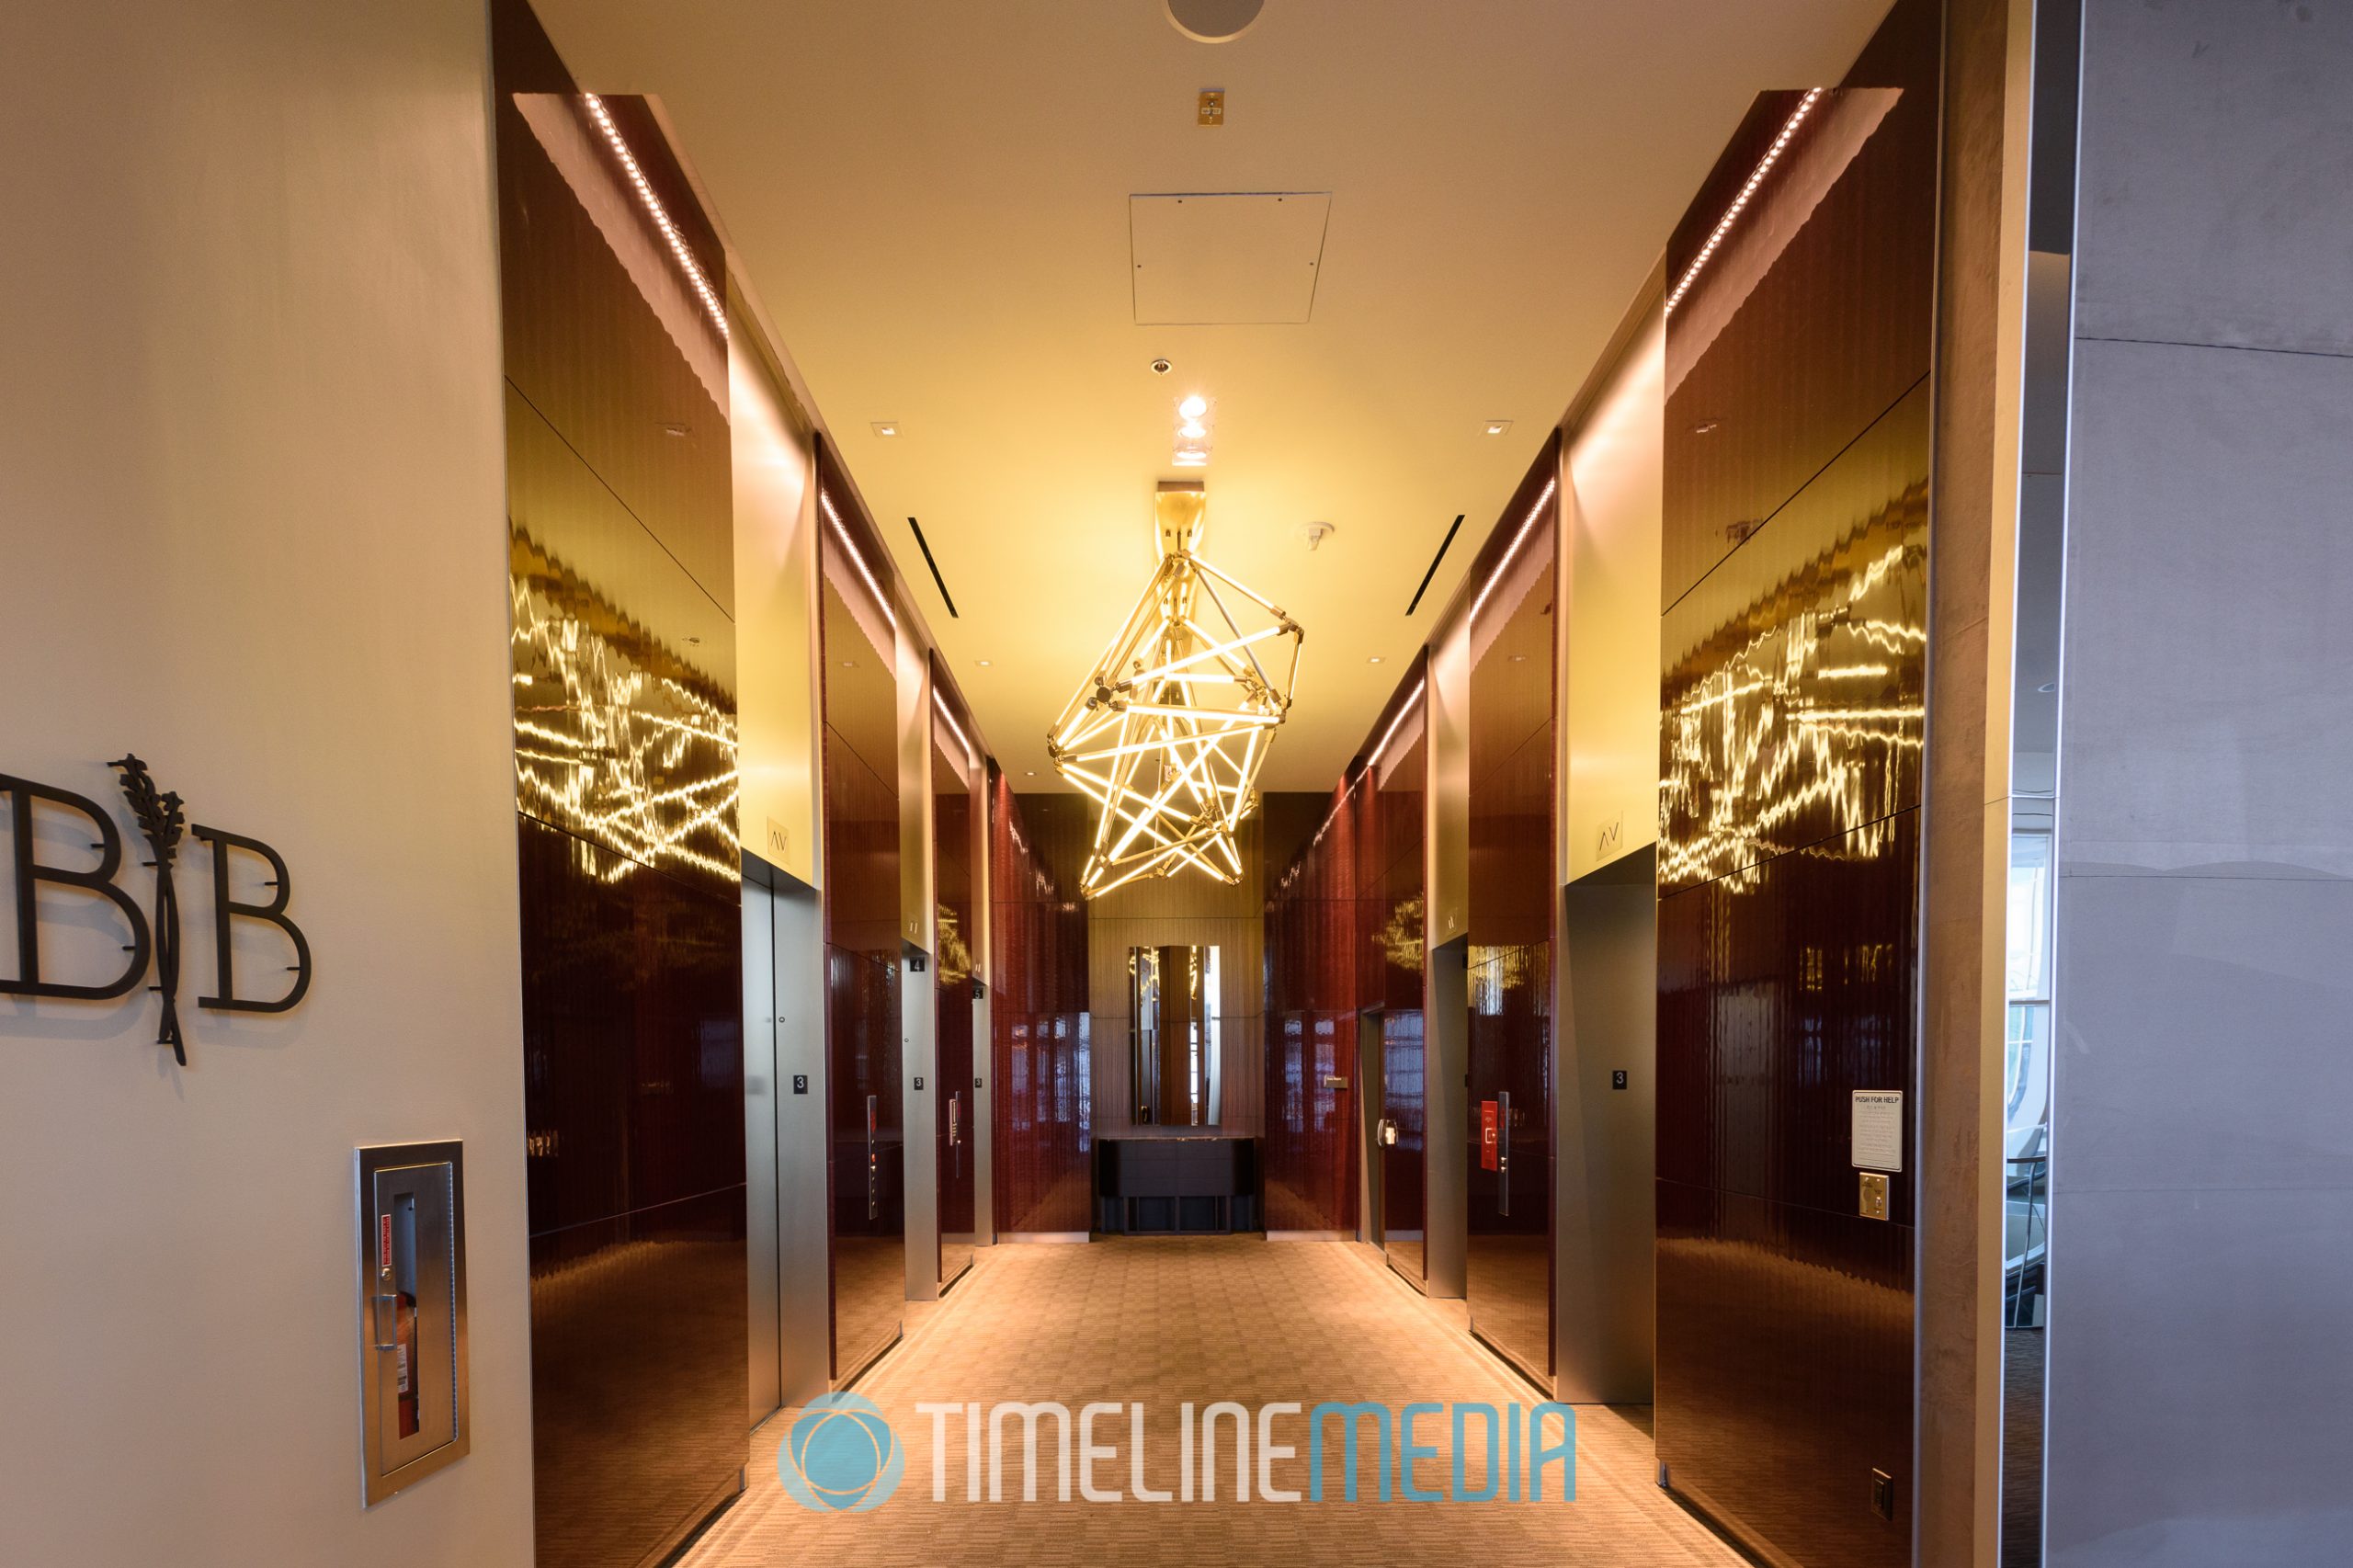 Hyatt chandelier and elevators ©TimeLine Media